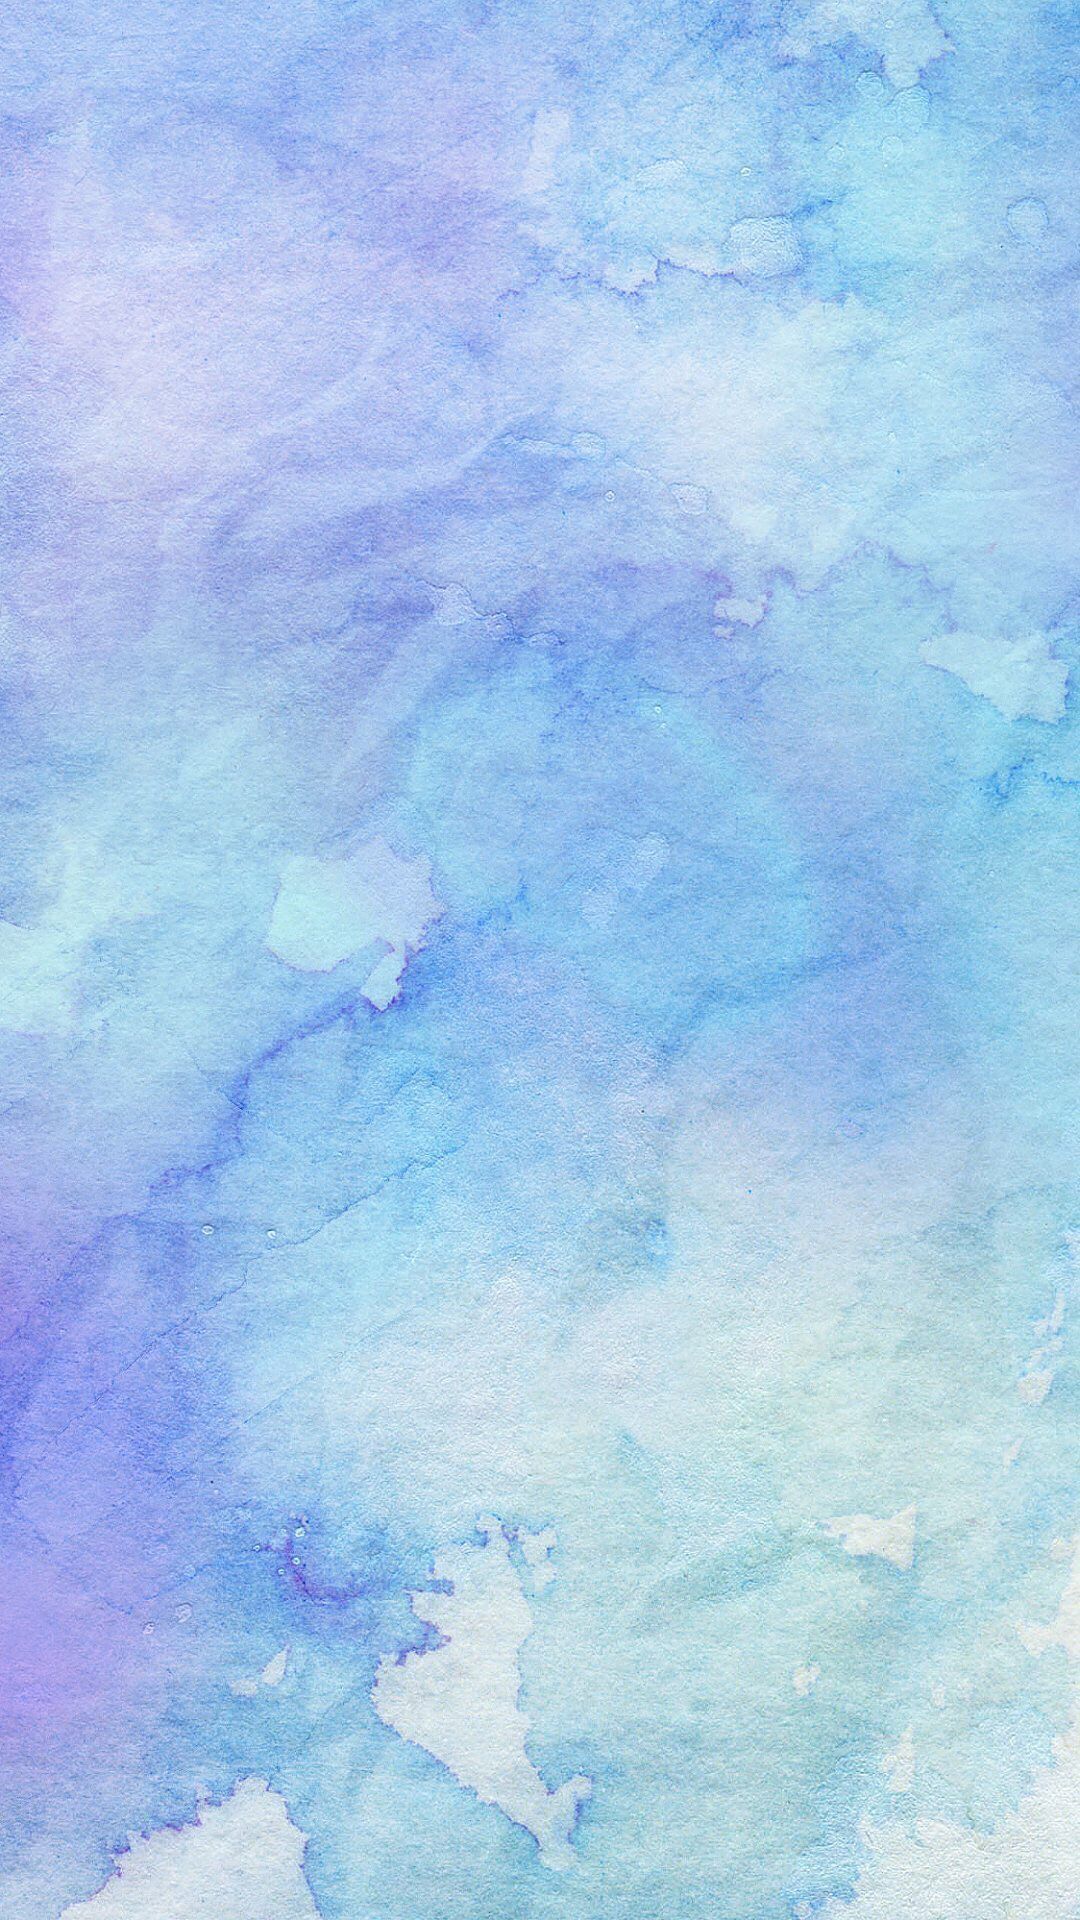 Pastel Blue Pattern Wallpaper Download. Watercolor wallpaper, Watercolor blue background, Blue wallpaper iphone